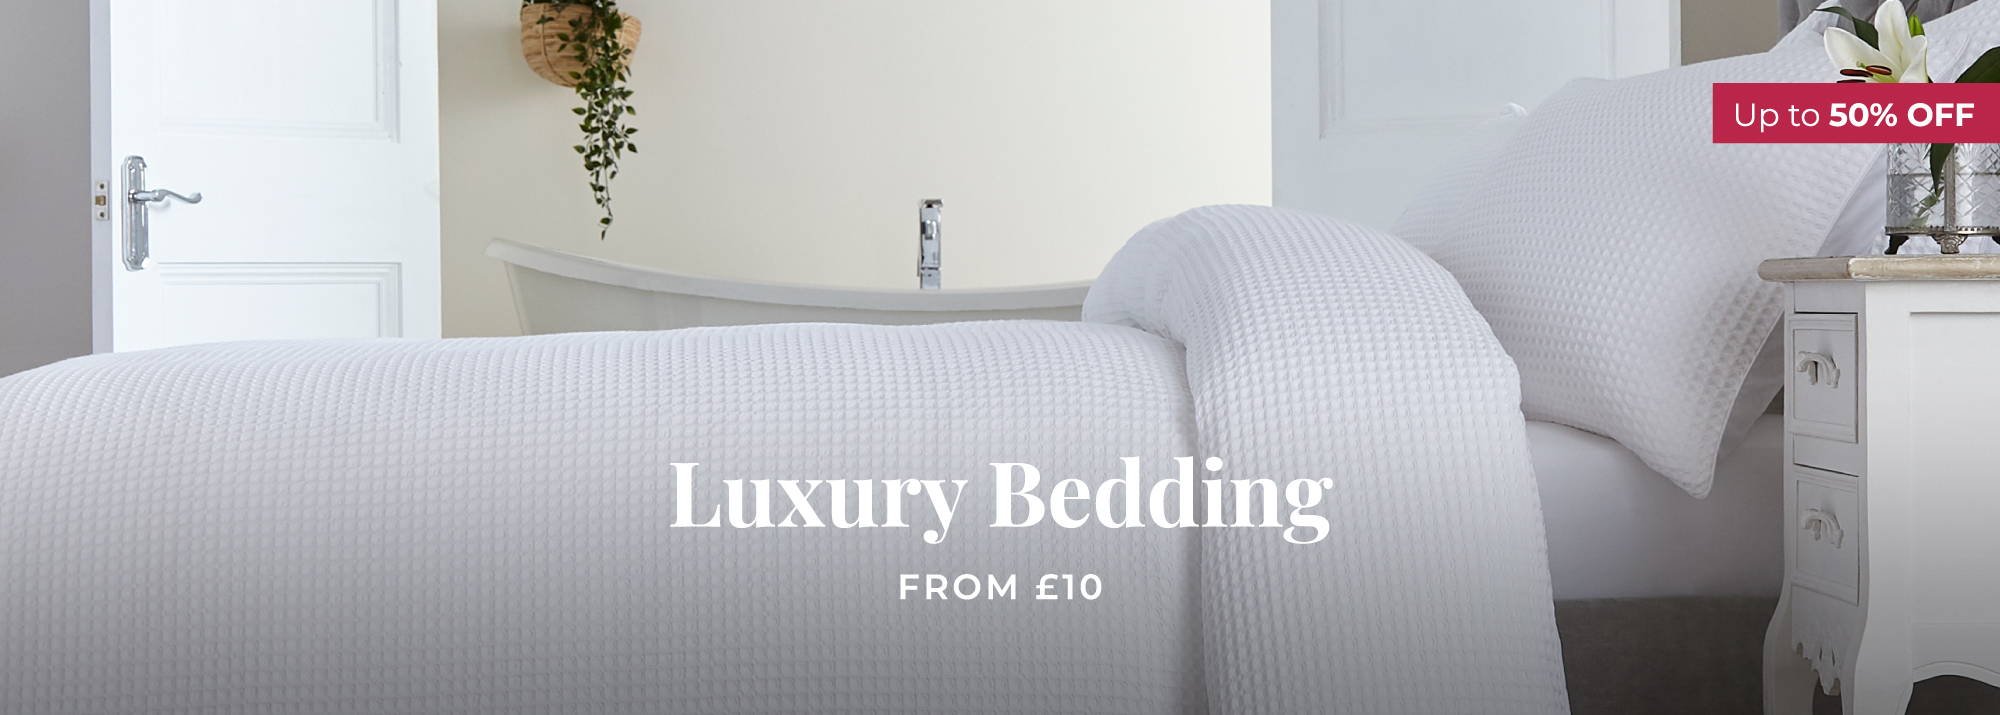 DUSK | Luxury Bedding From £10